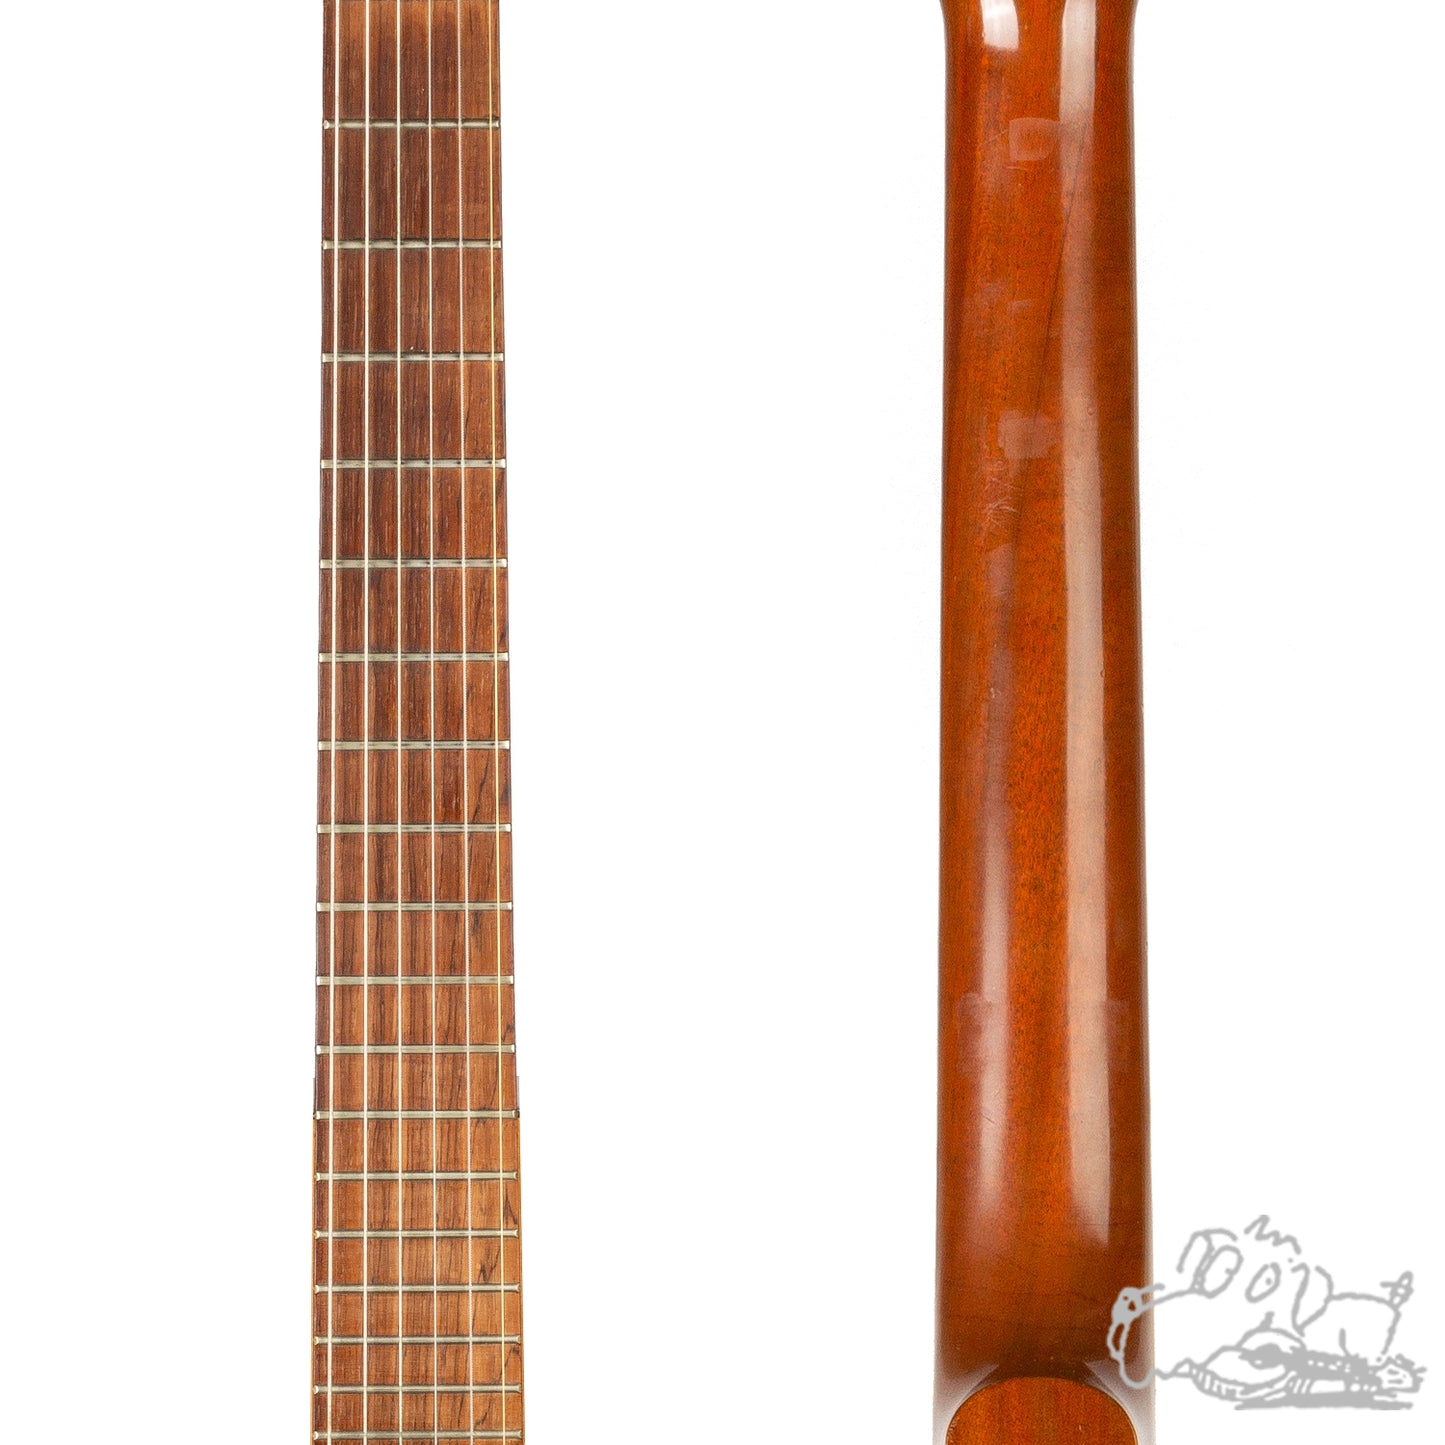 1961 Gibson C-1